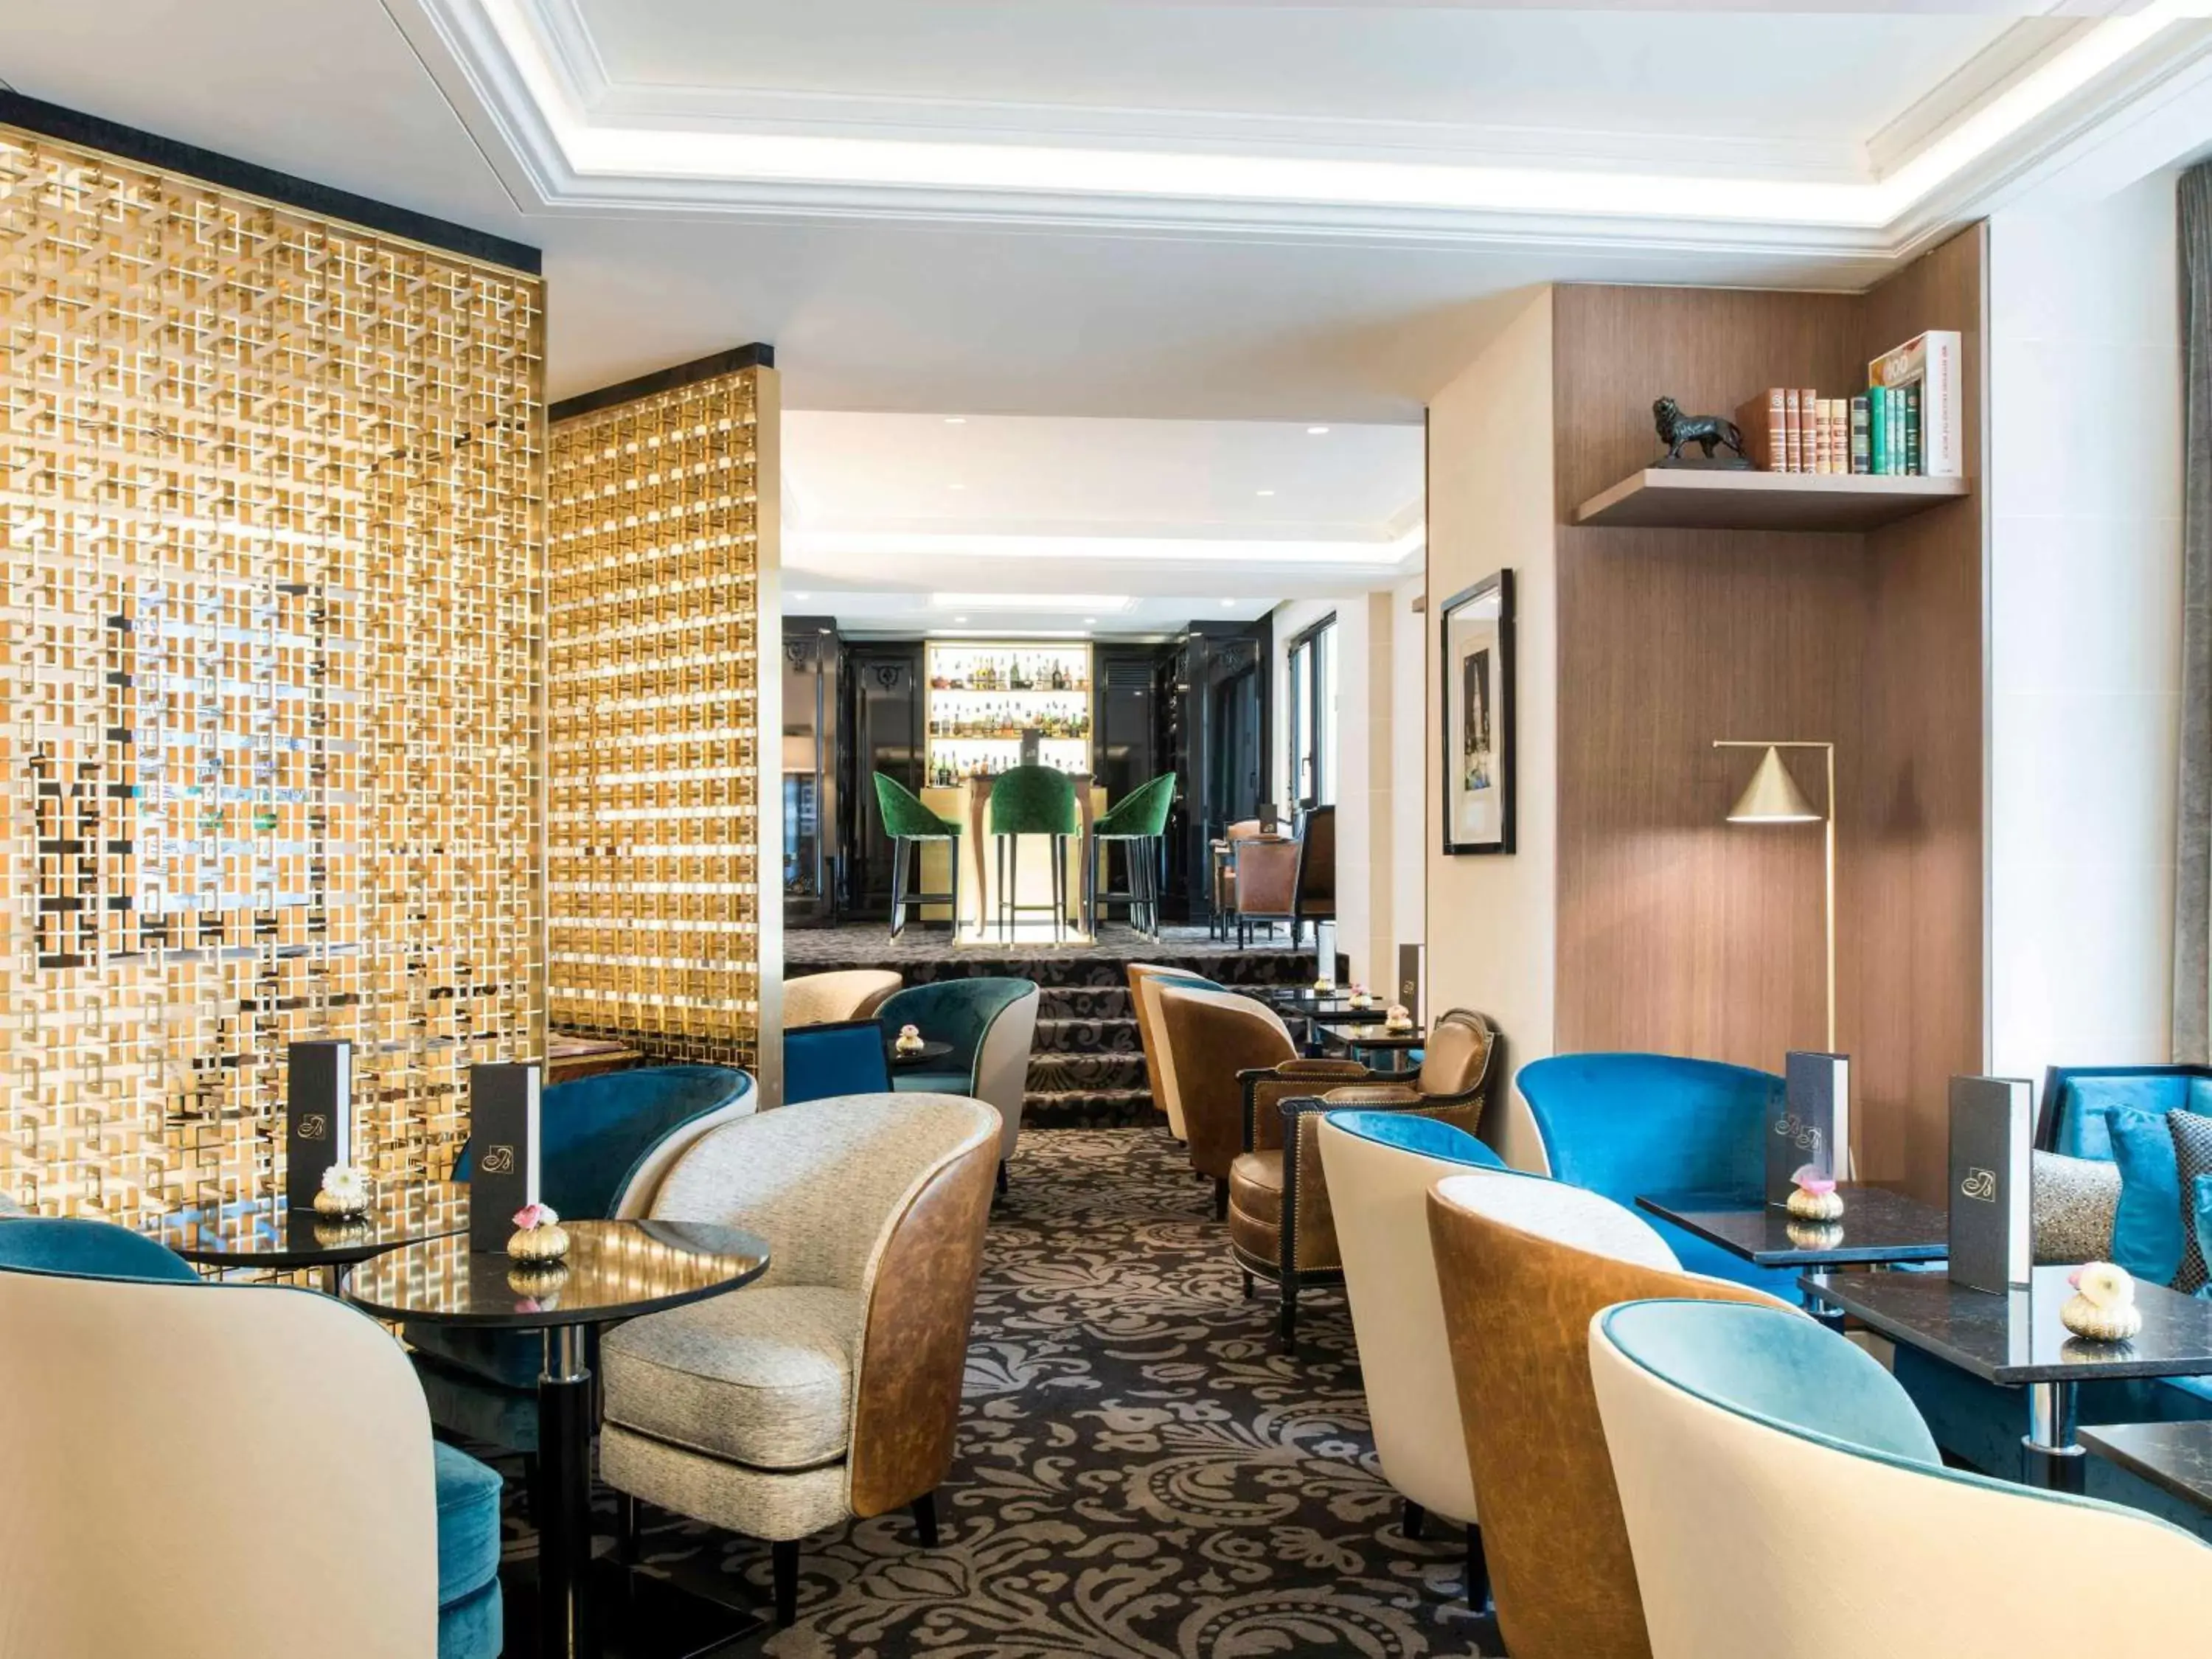 Restaurant/places to eat, Lounge/Bar in Sofitel Paris Baltimore Tour Eiffel